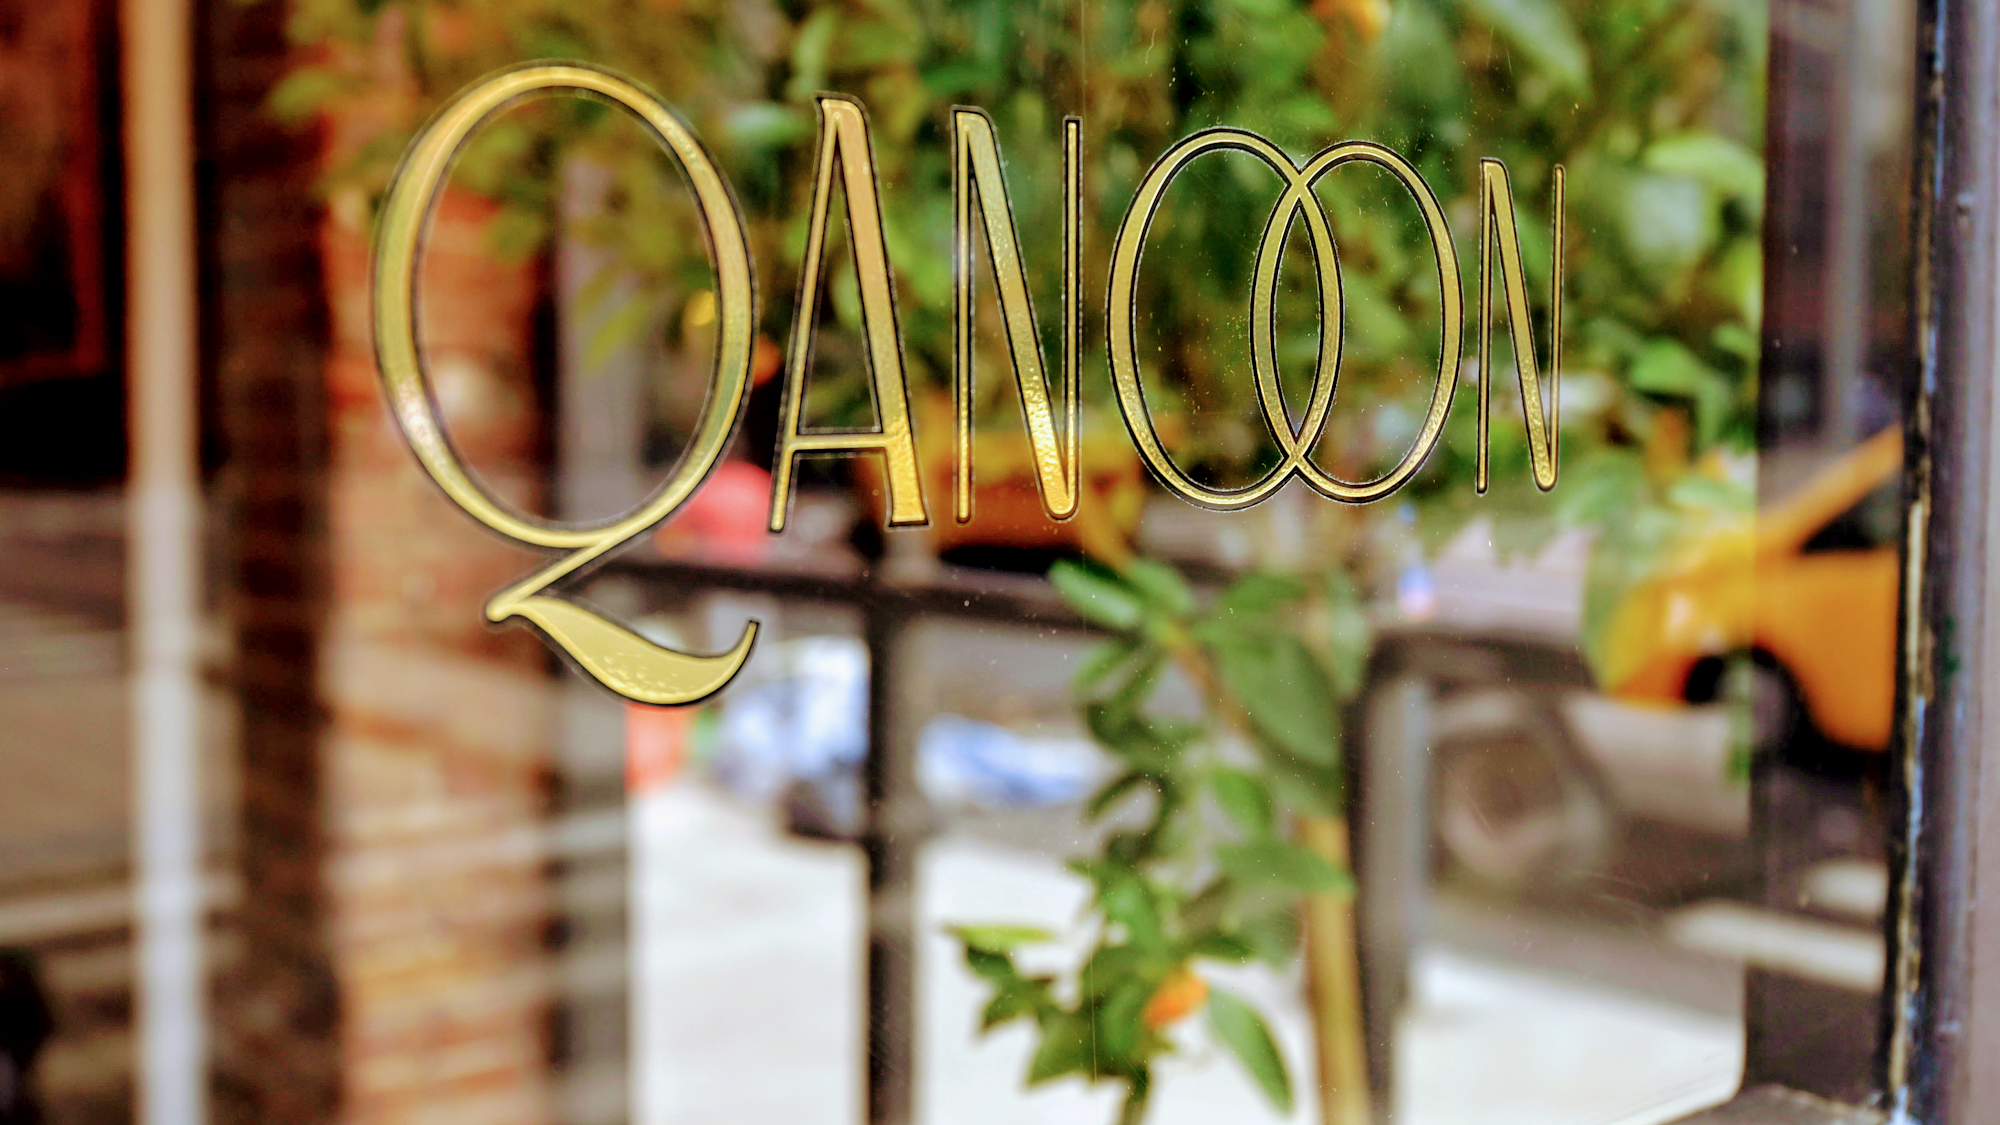 Qanoon restaurant